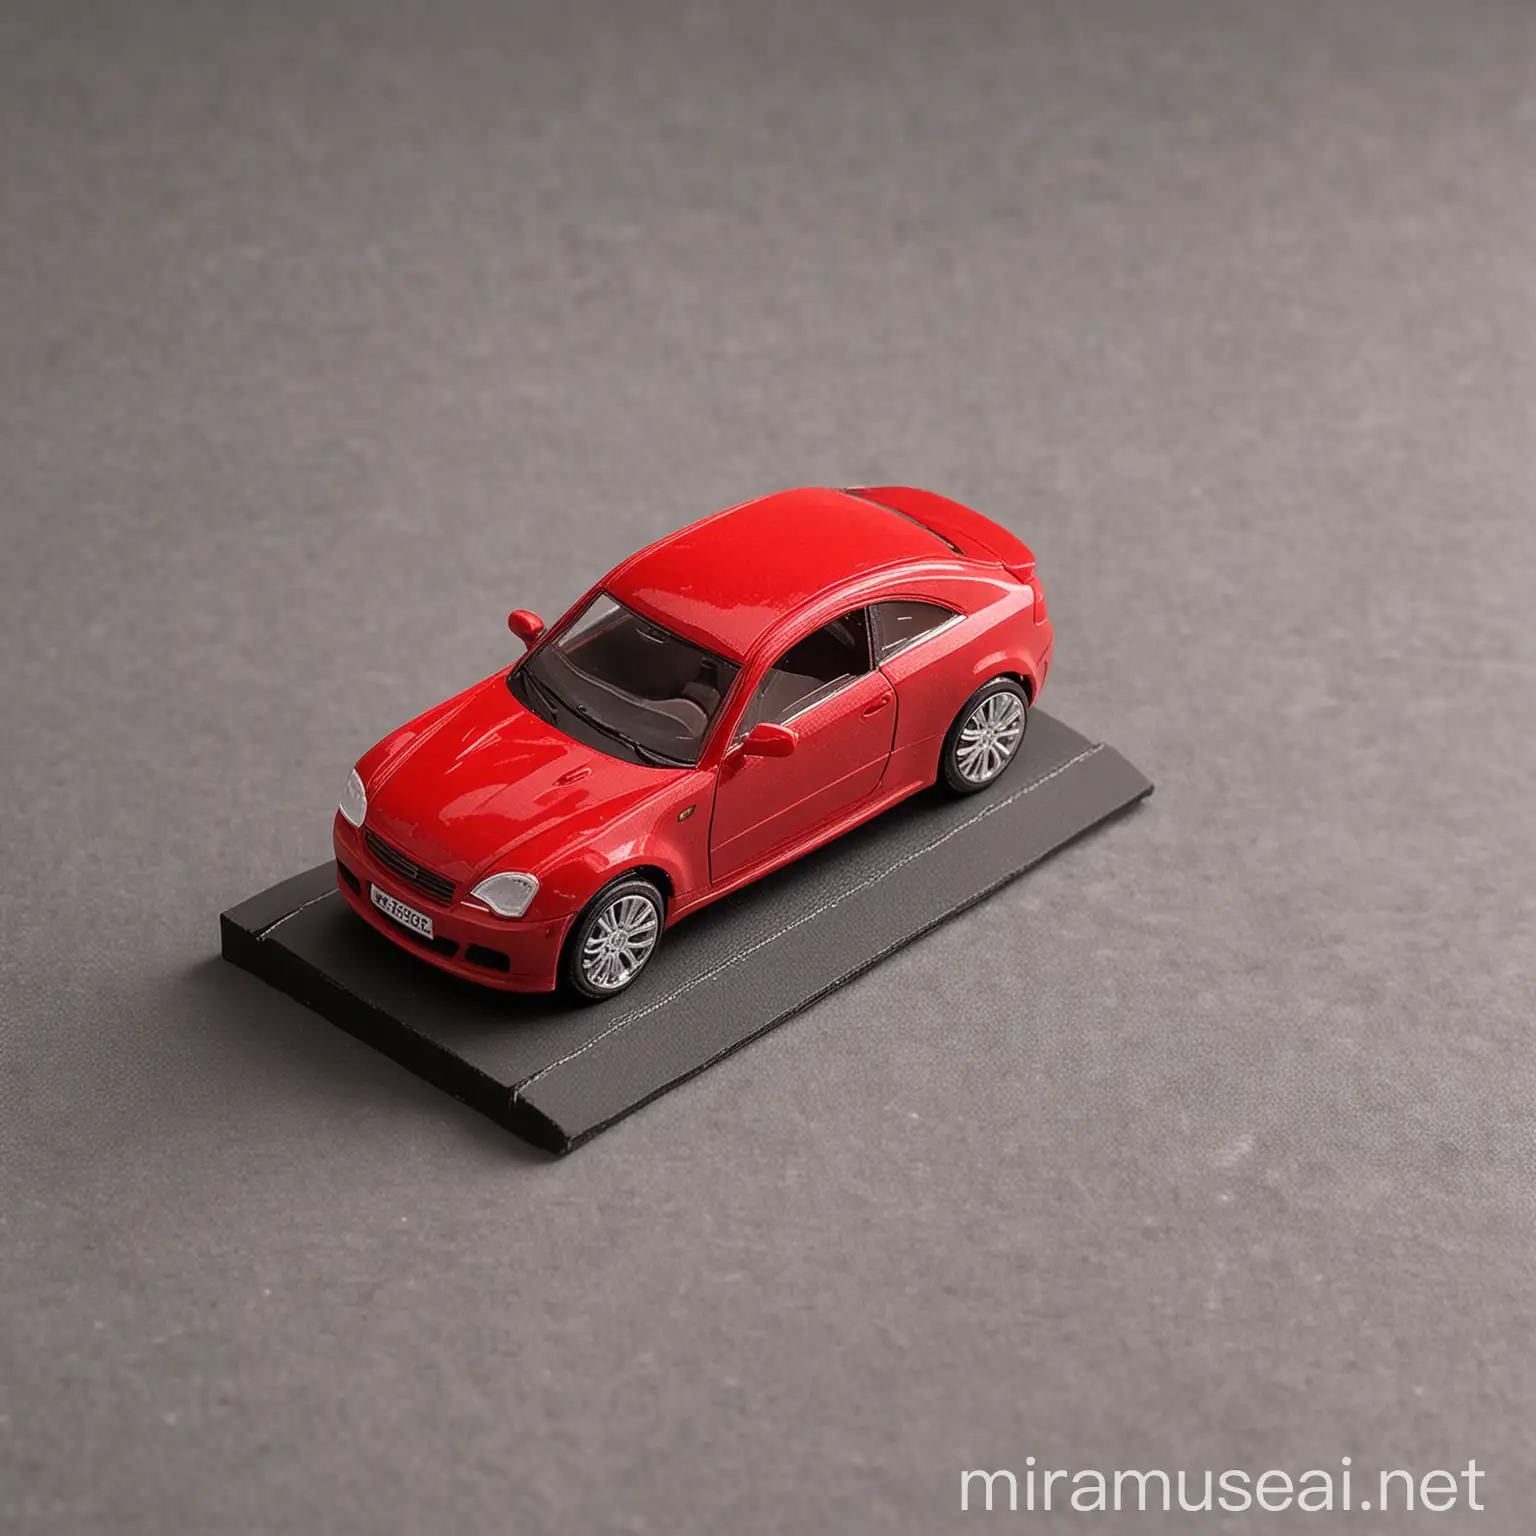 miniature modern  red car